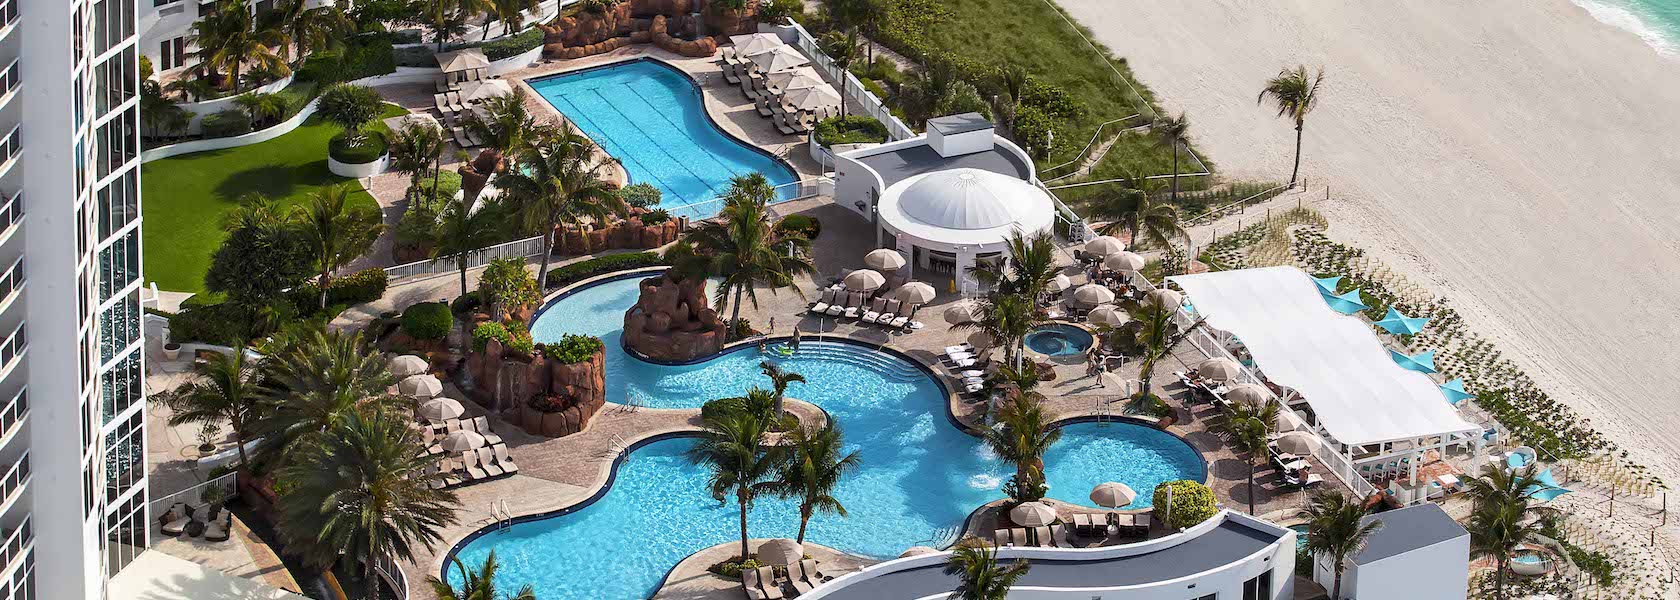 Pool and palm trees at Trump International Beach Resort